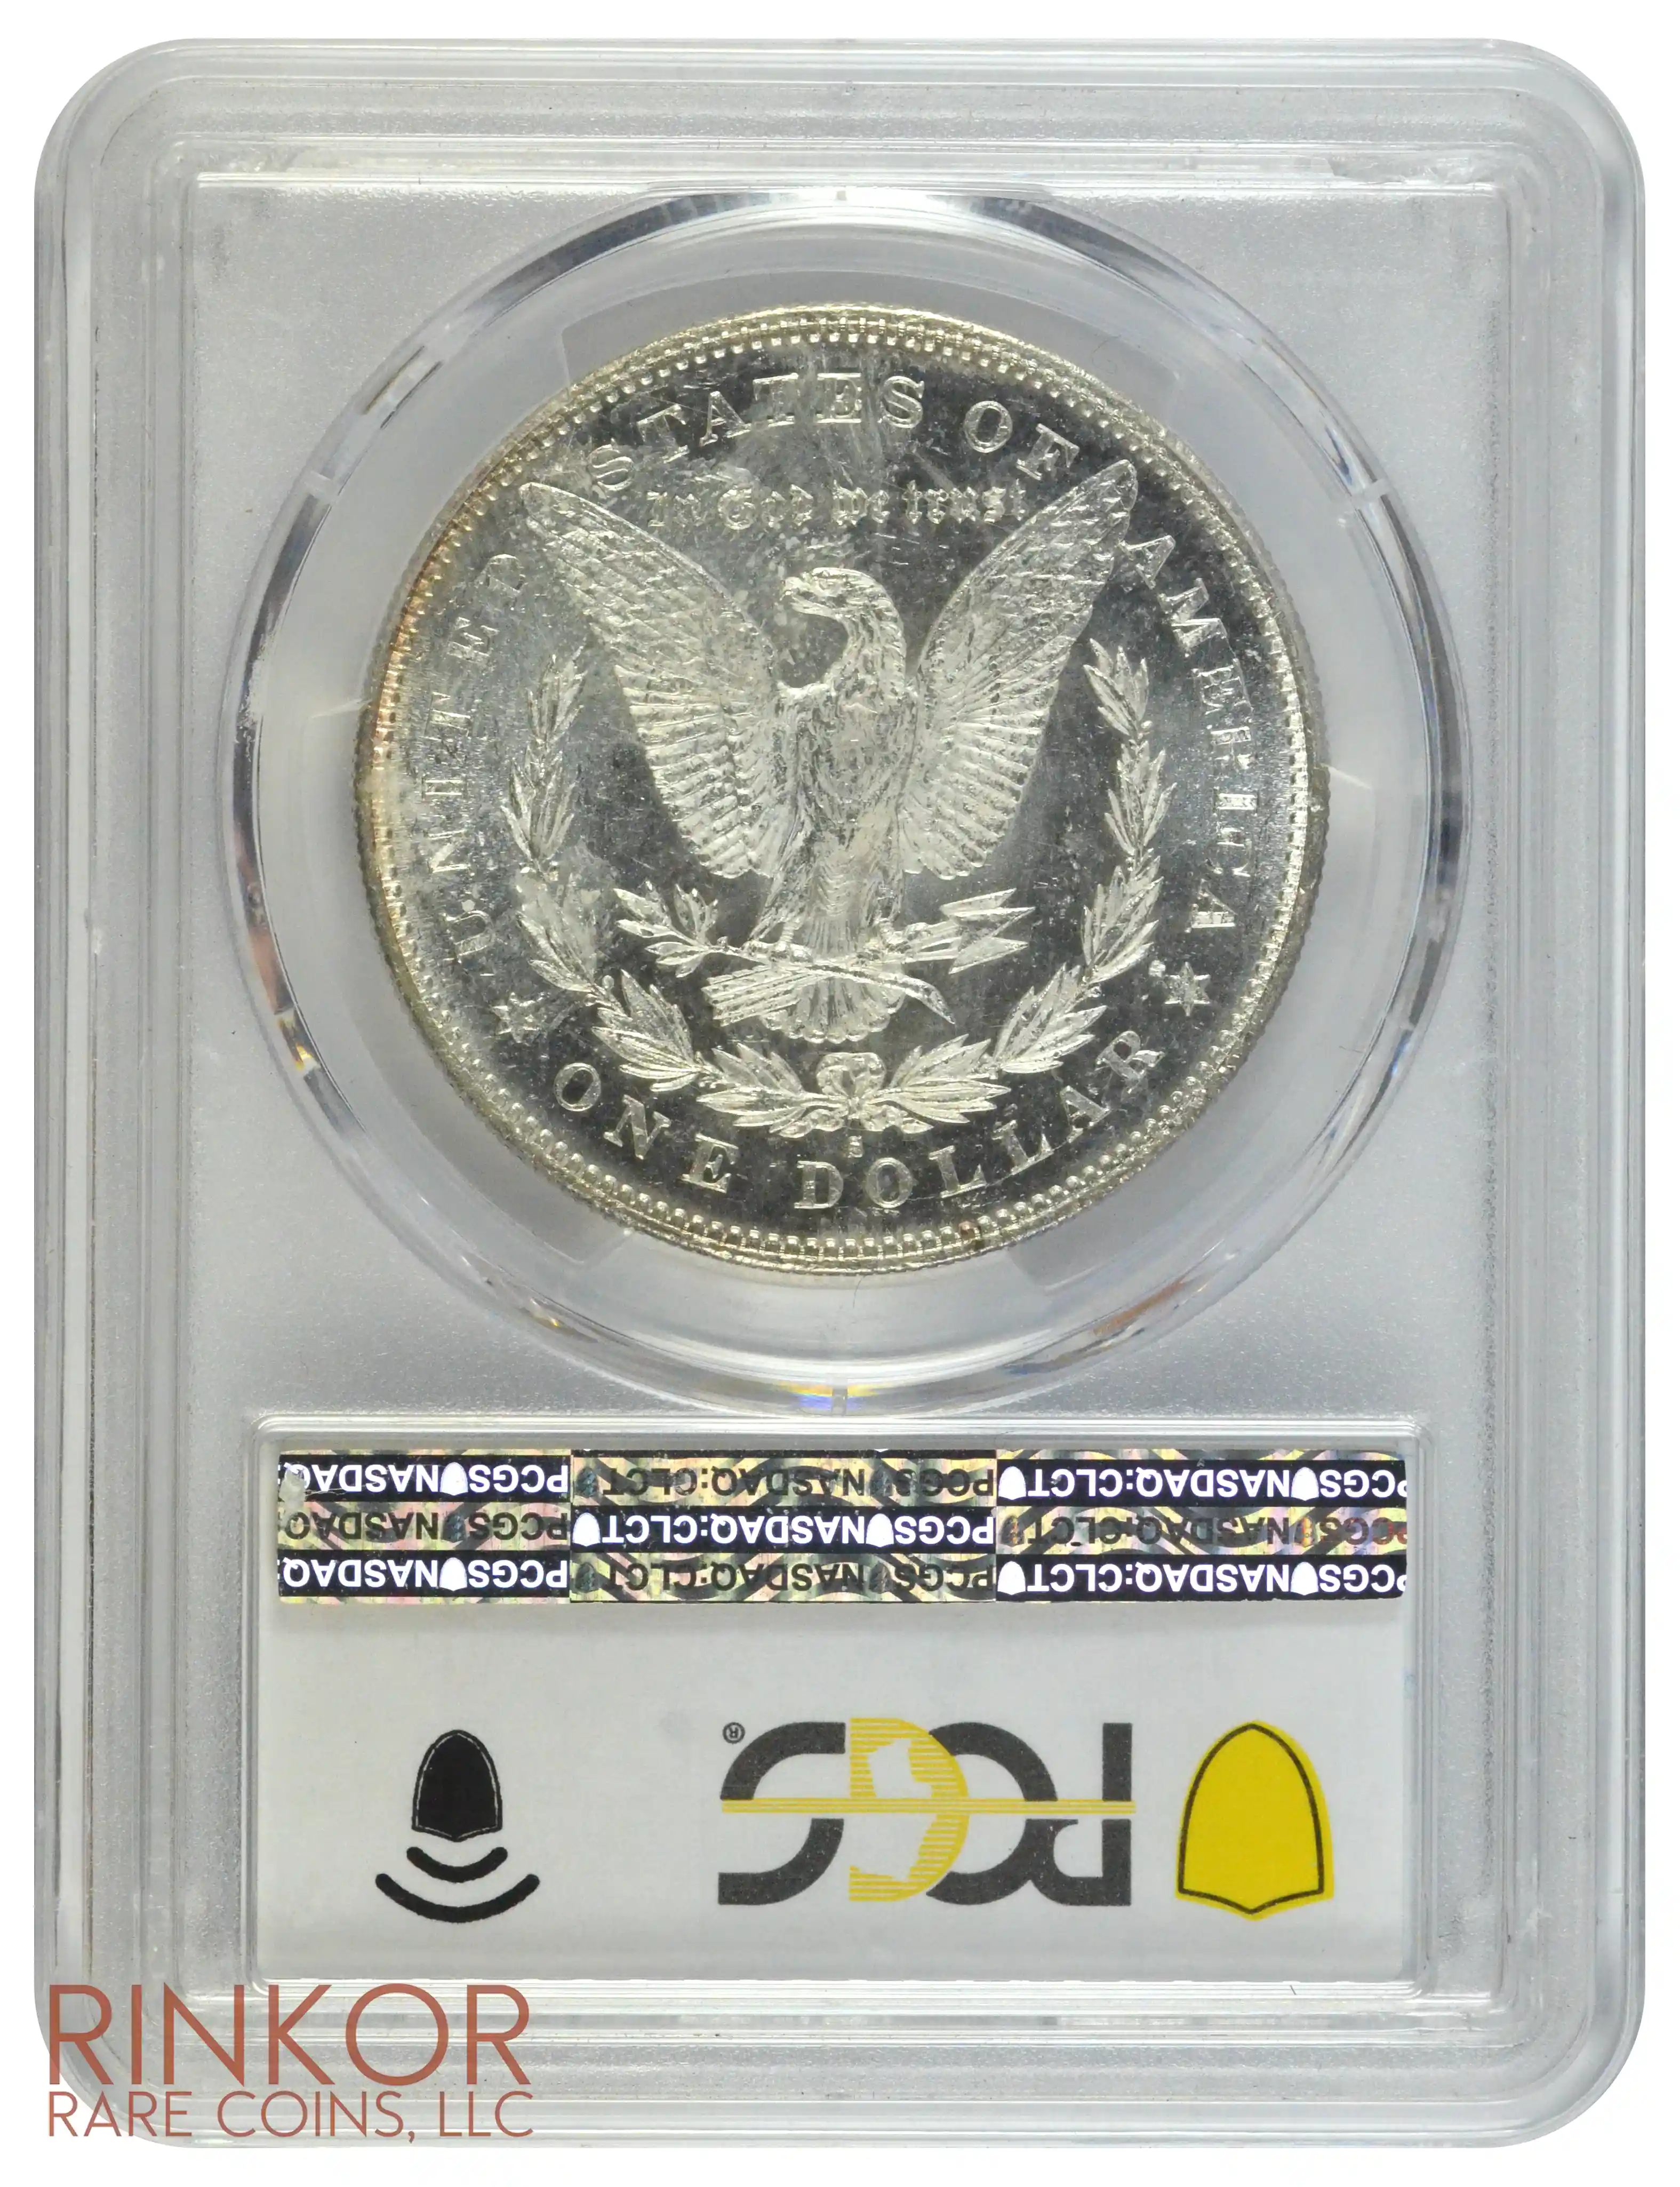 1879-S $1 VAM 51 Reverse of 1878 PCGS MS 62 PL